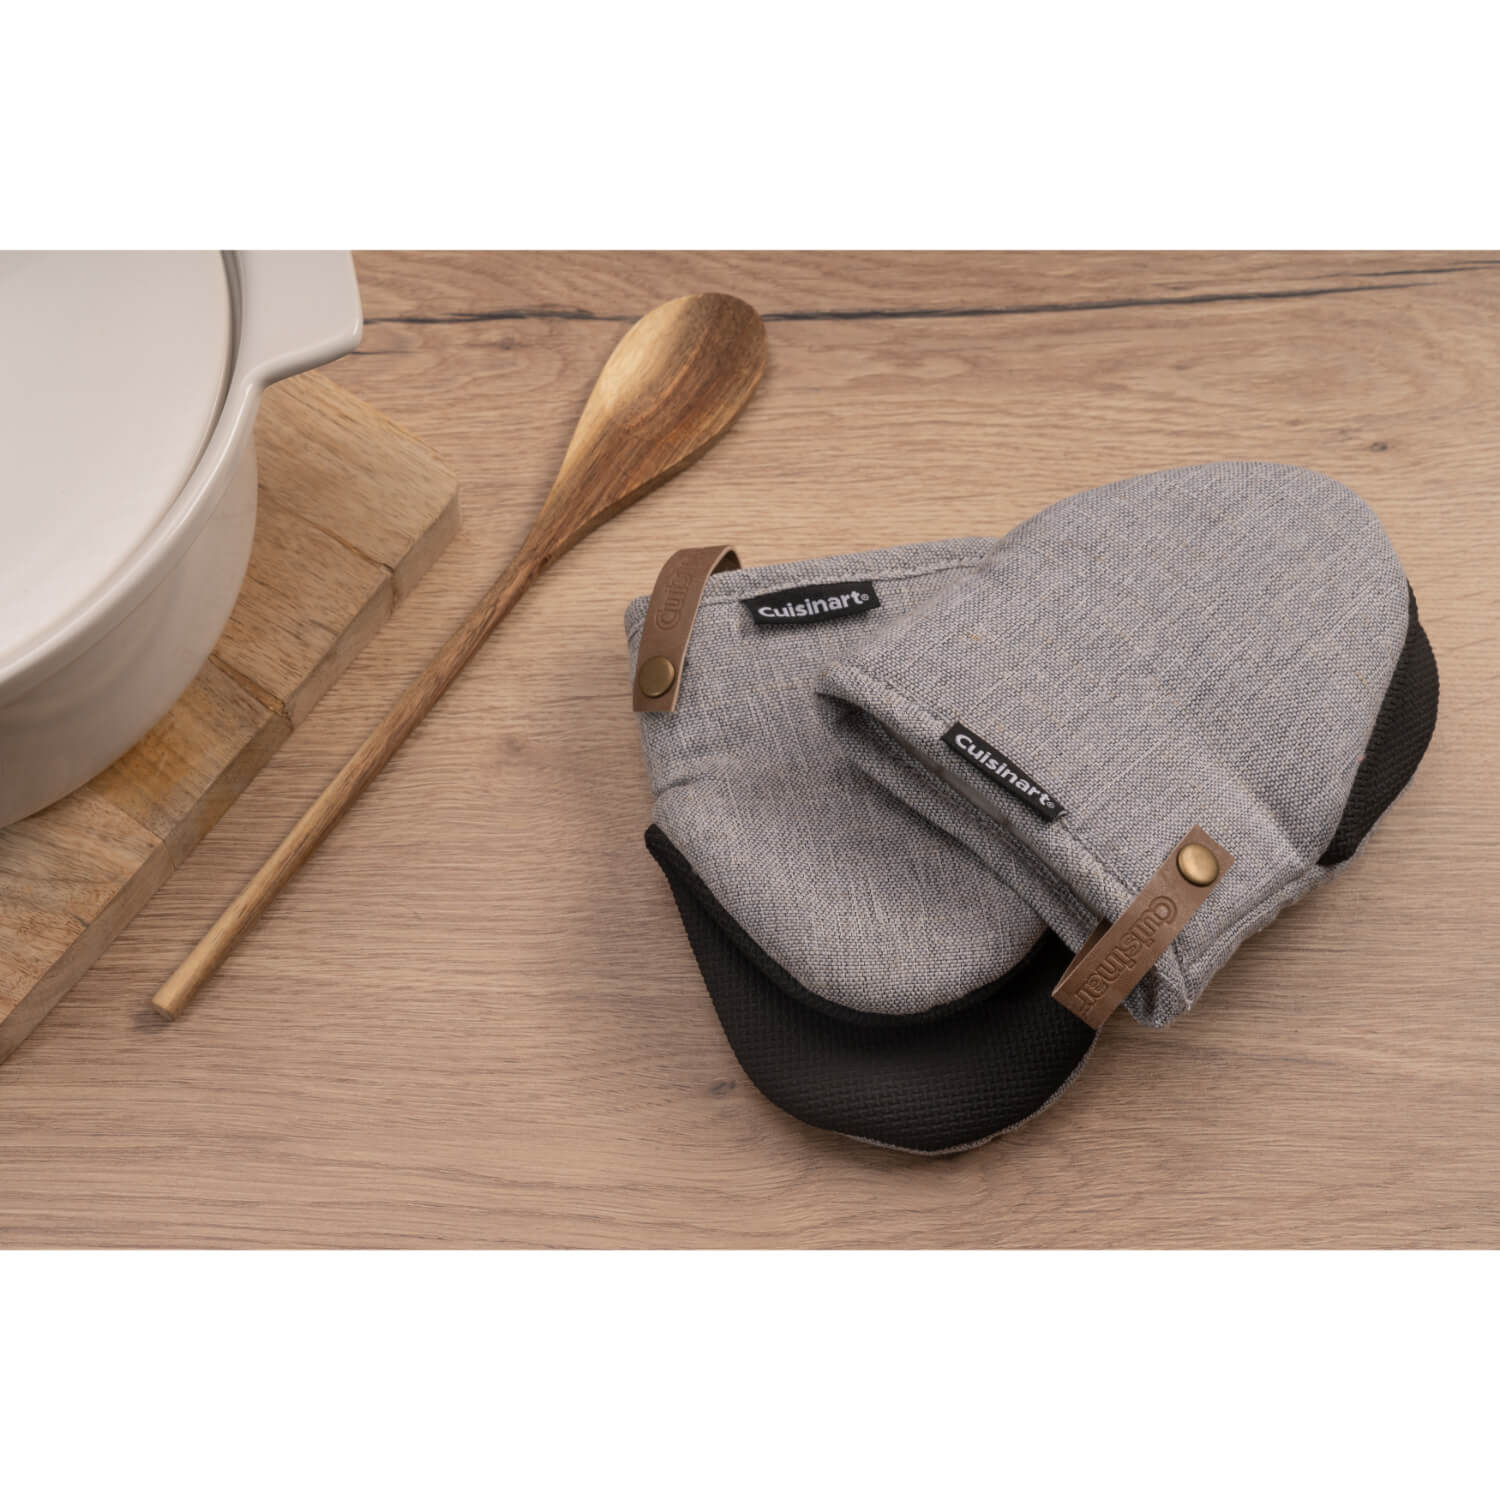 Buy Cuisinart  Neoprene Pack of 2 Mini Oven Mitts - Charcoal – Potters  Cookshop